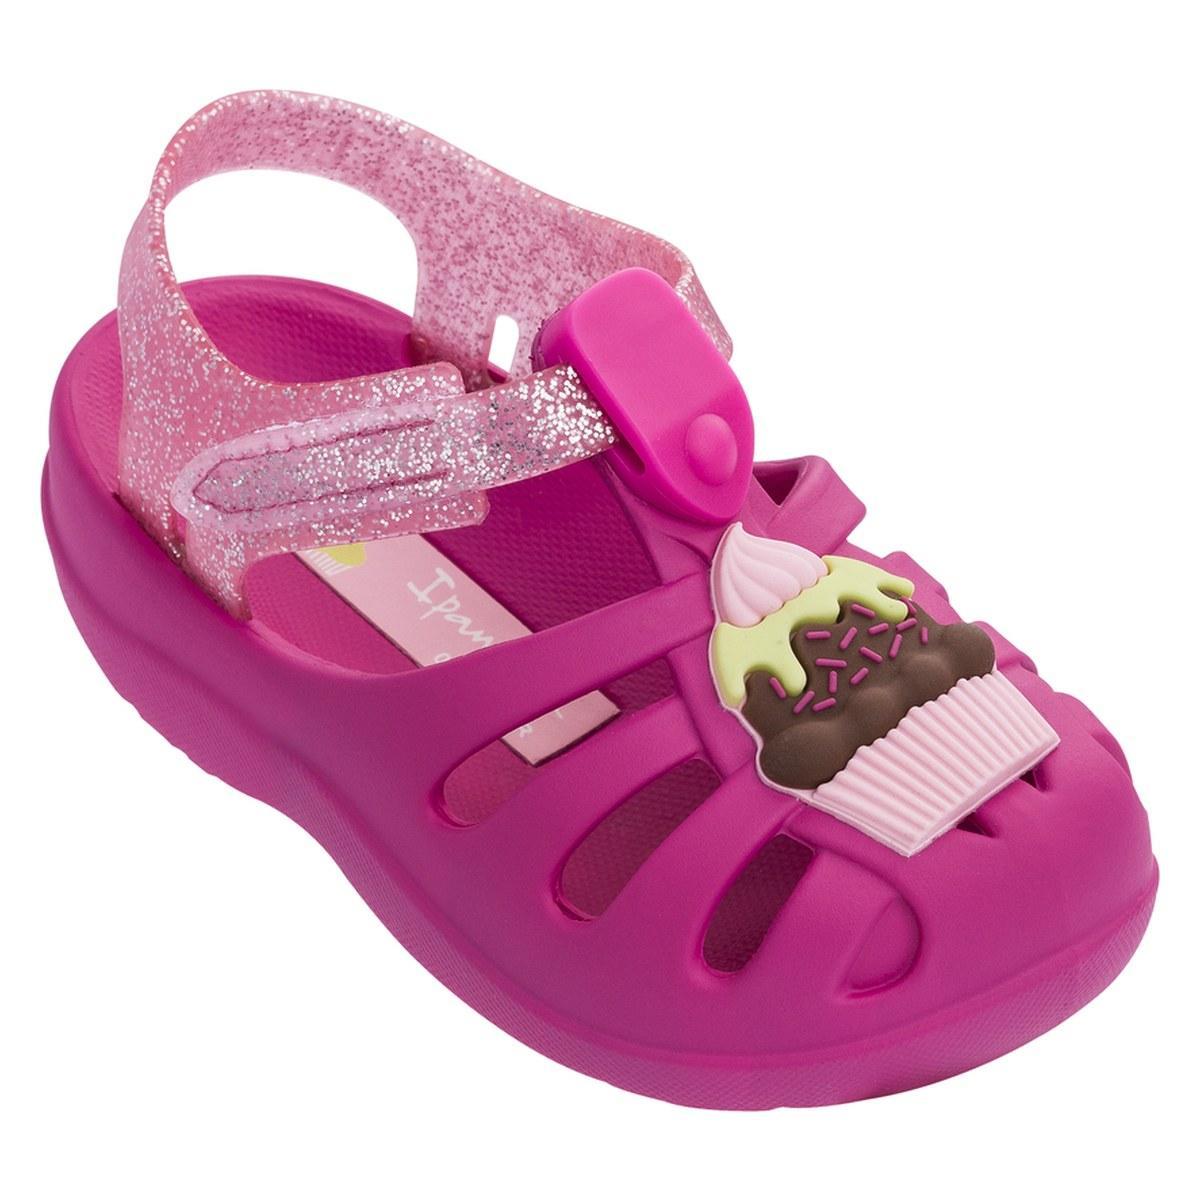 Ipanema Ipanema sandal 82599 D pink 24 - Baby Center spletna trgovina ...